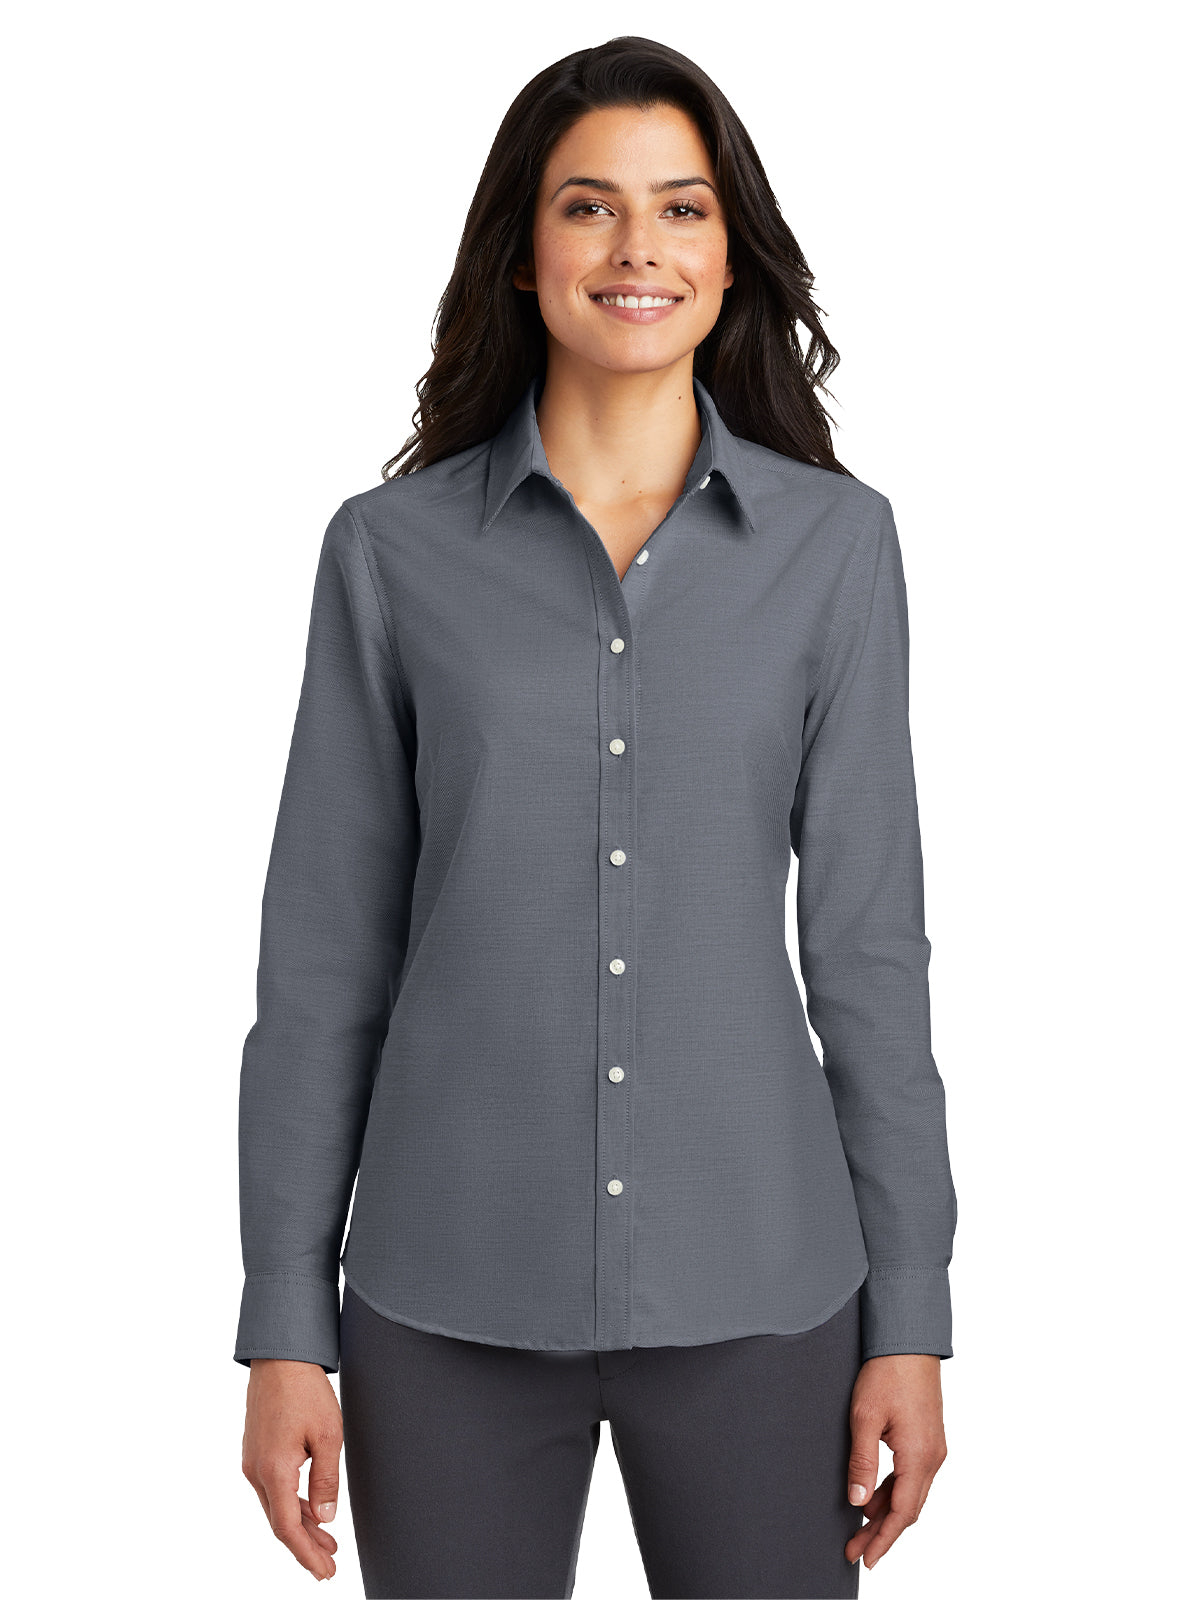 Women's Oxford Button Up Shirt - L658 - Black